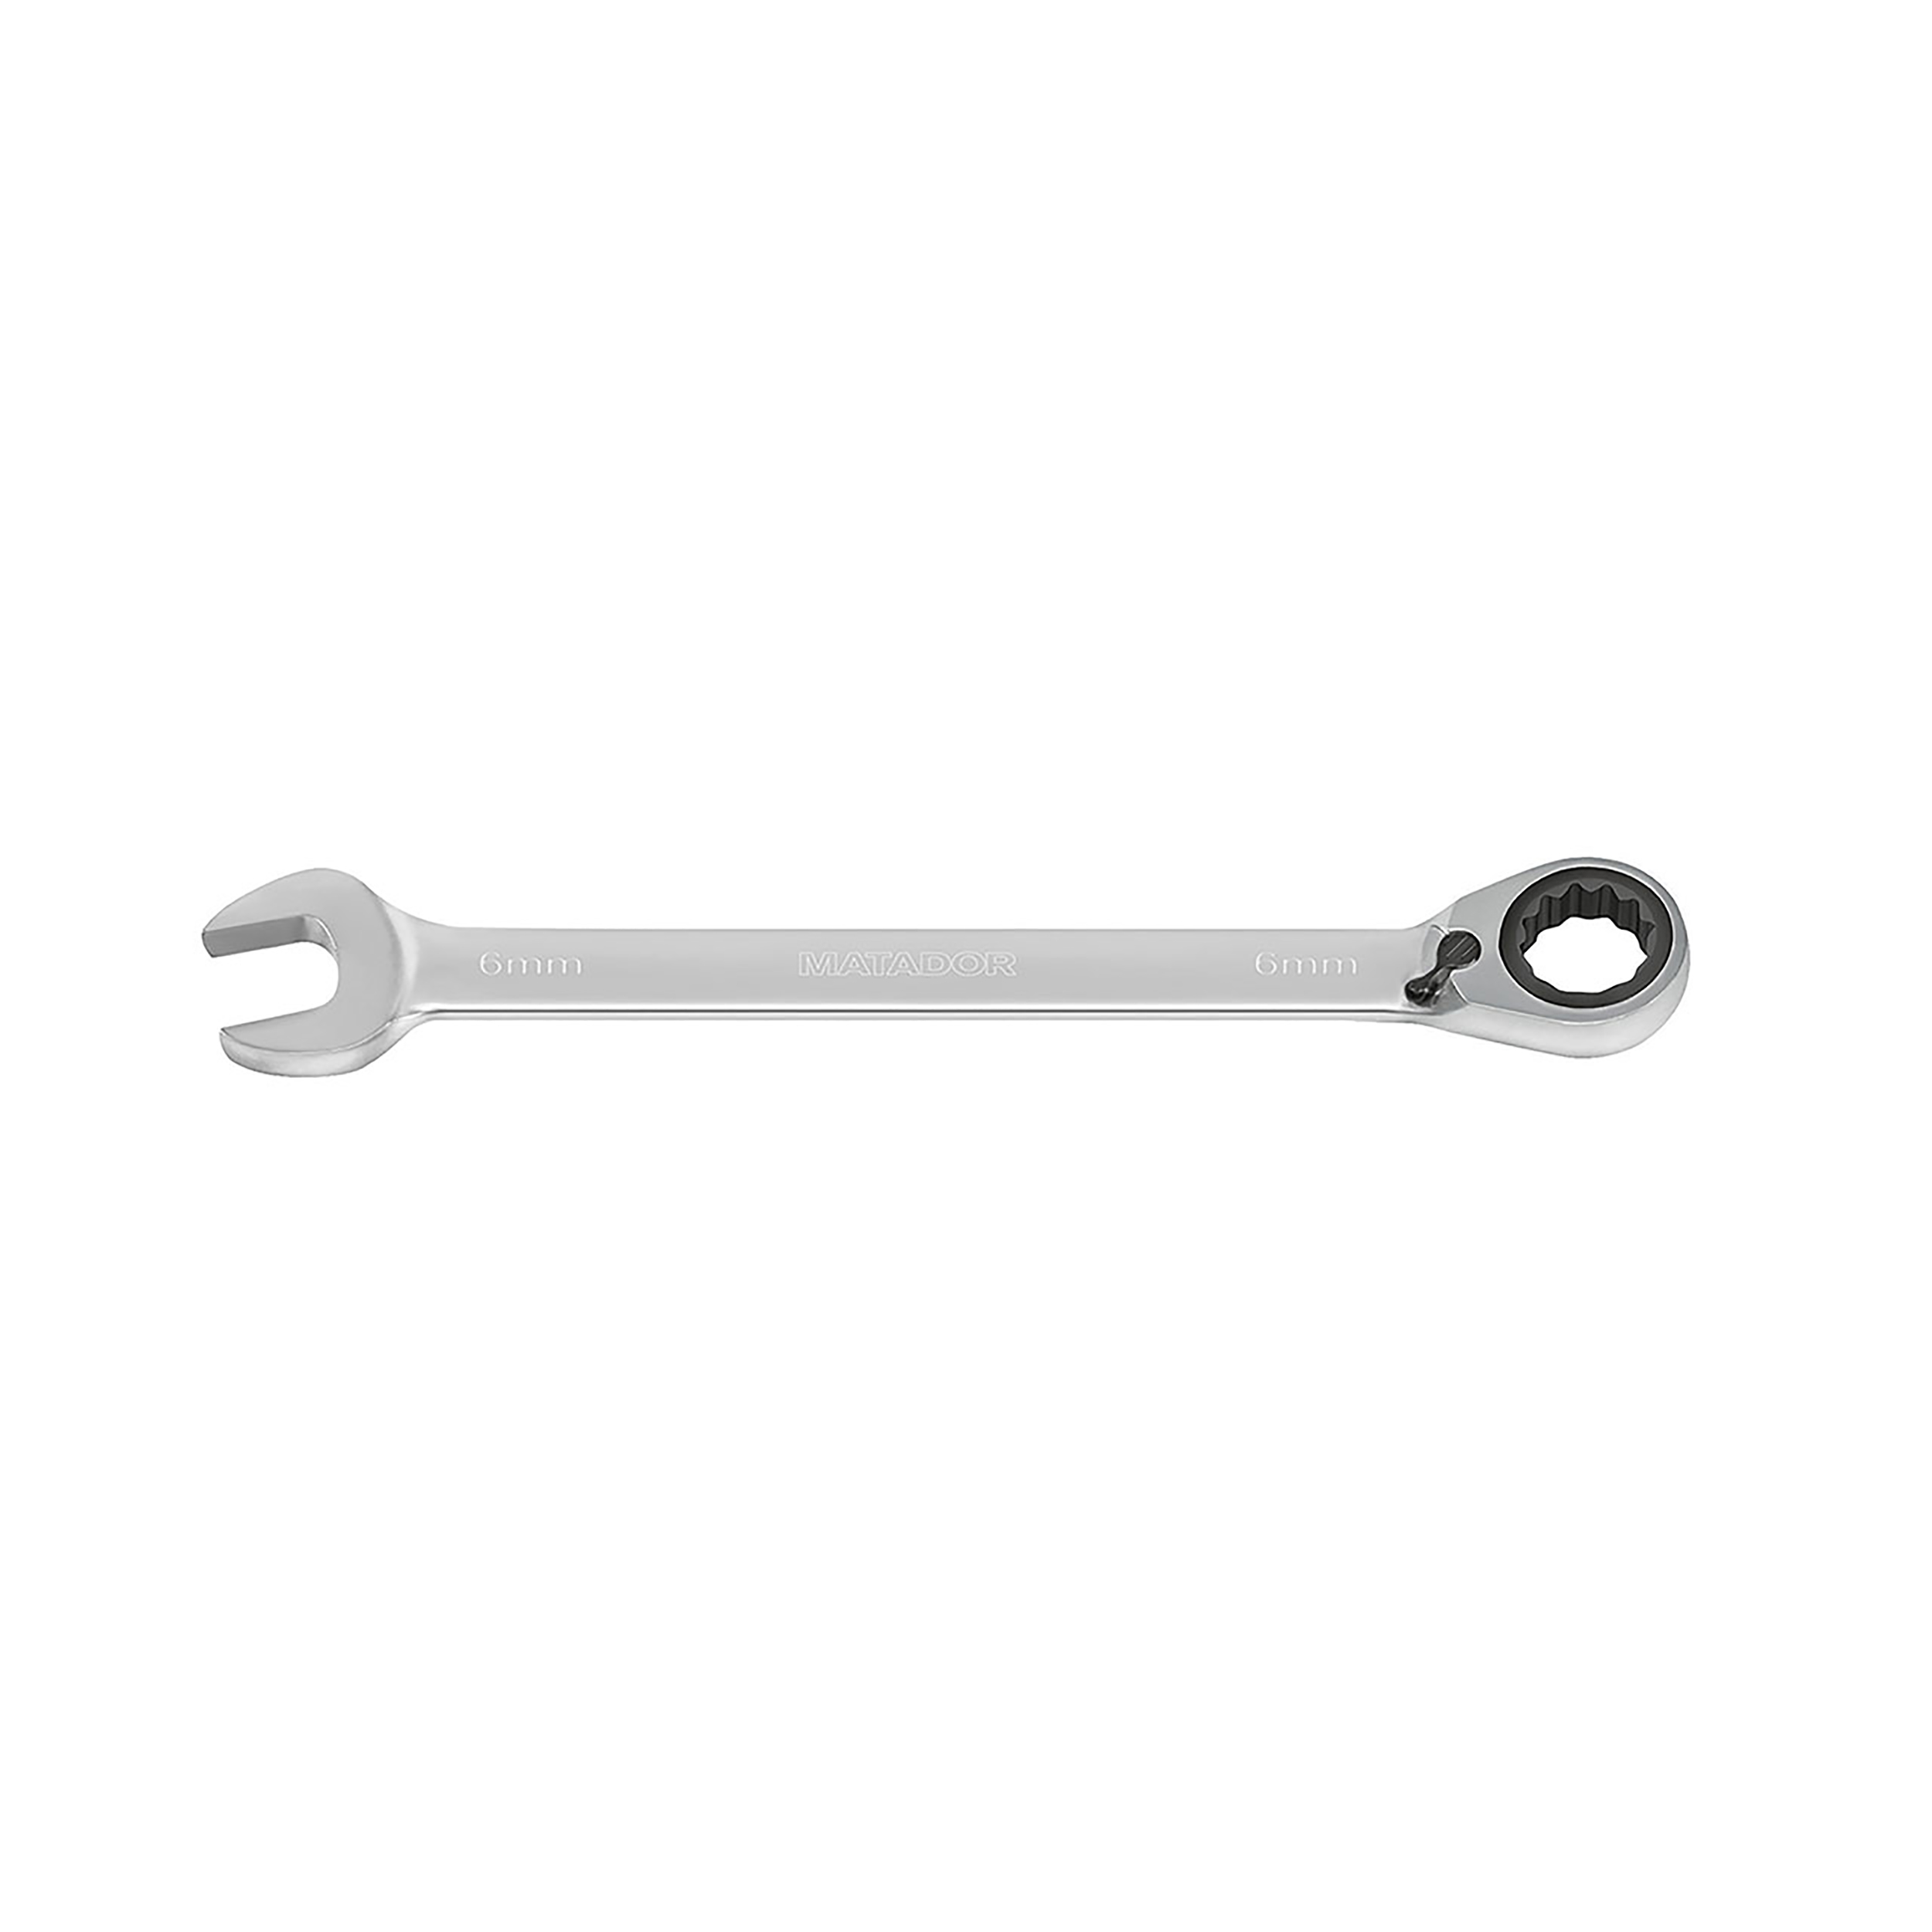 Knarren-Ringmaulschlüssel mit Hebel, 11 mm, 96 Nm, MATADOR Art.-Nr.: 01890110